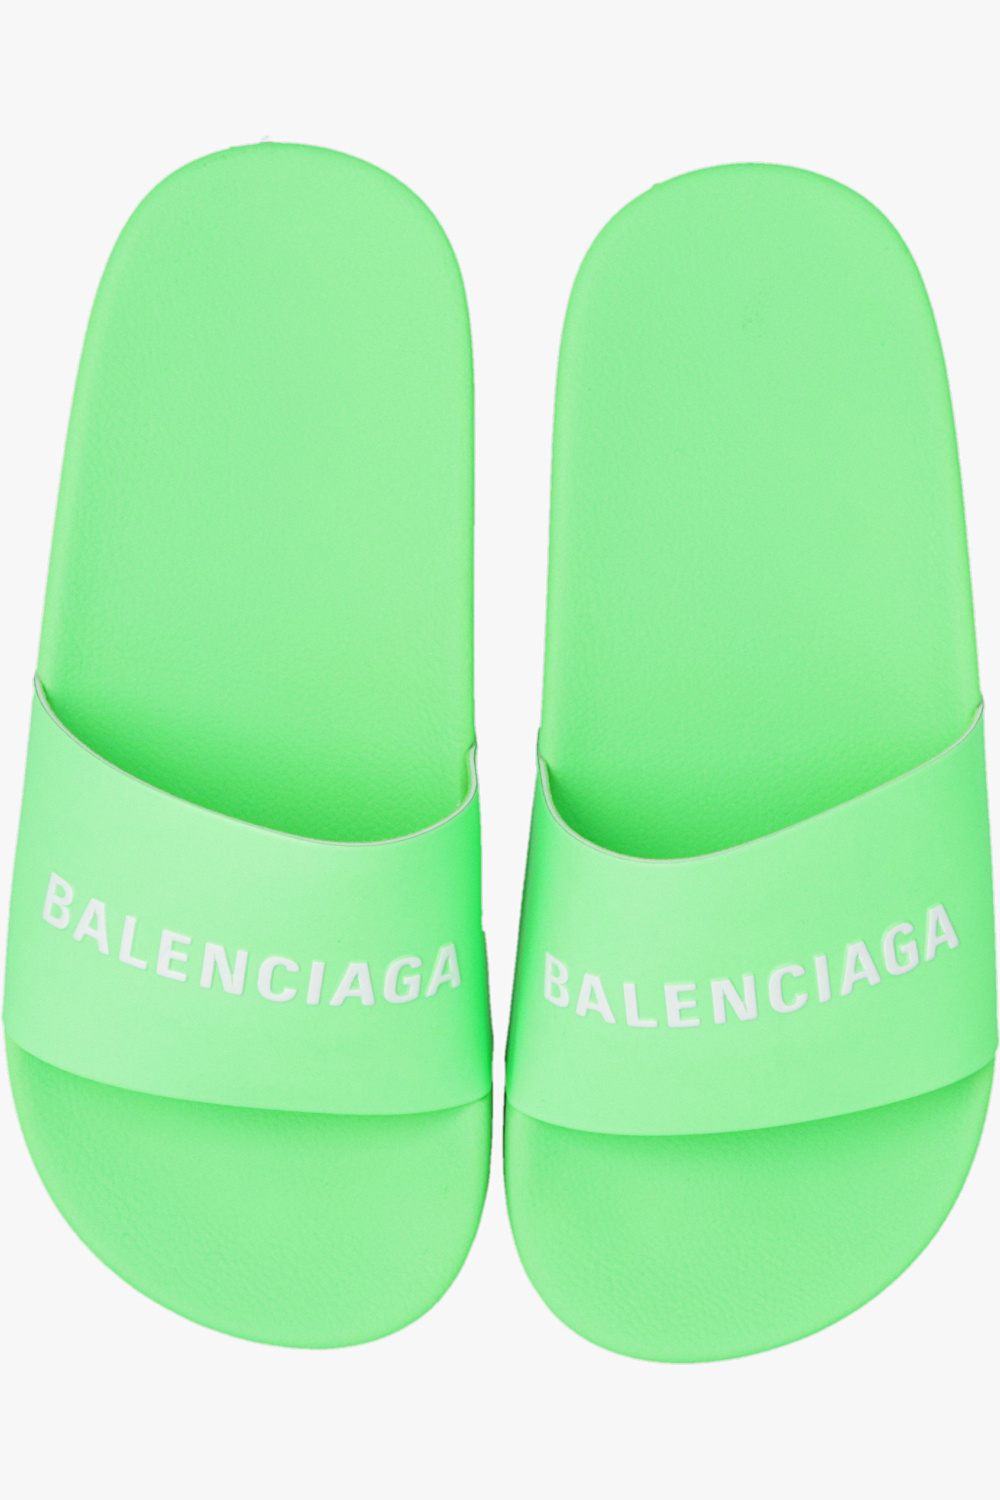 Balenciaga Kids the original shoe boutique that grew into a nationwide influencer of urban fashion